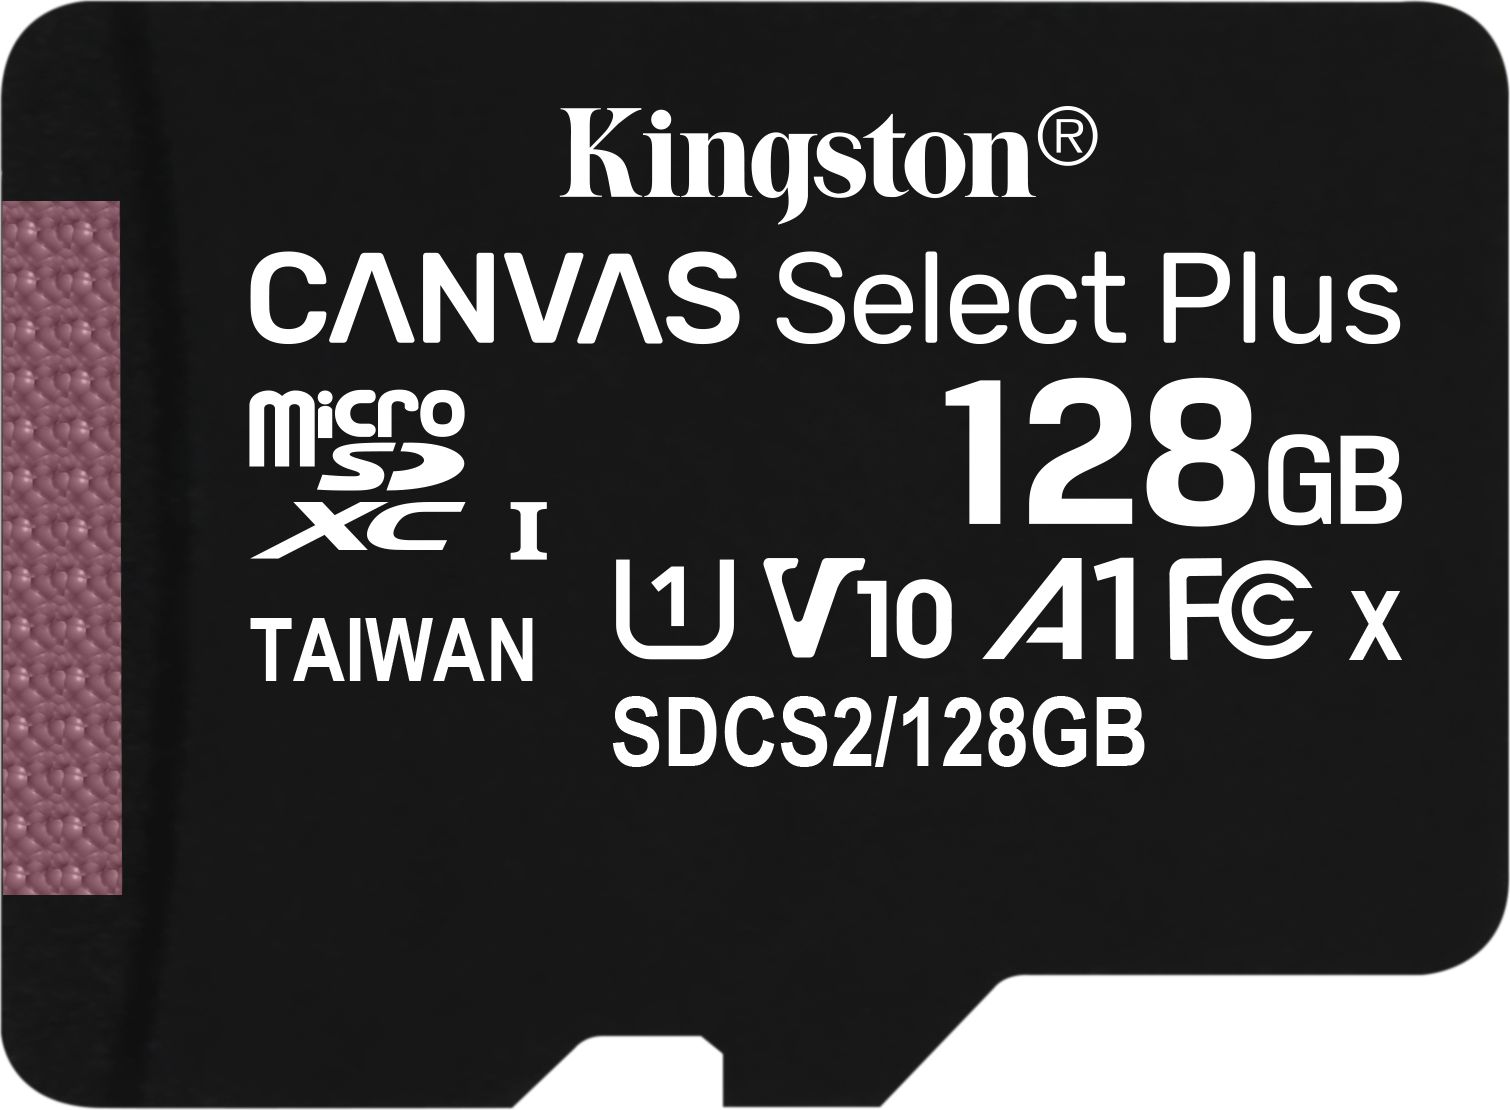 Karta Kingston Canvas Select Plus MicroSDXC 128 GB Class 10 UHS-I/U1 A1 V10 (SDCS2/128GBSP)